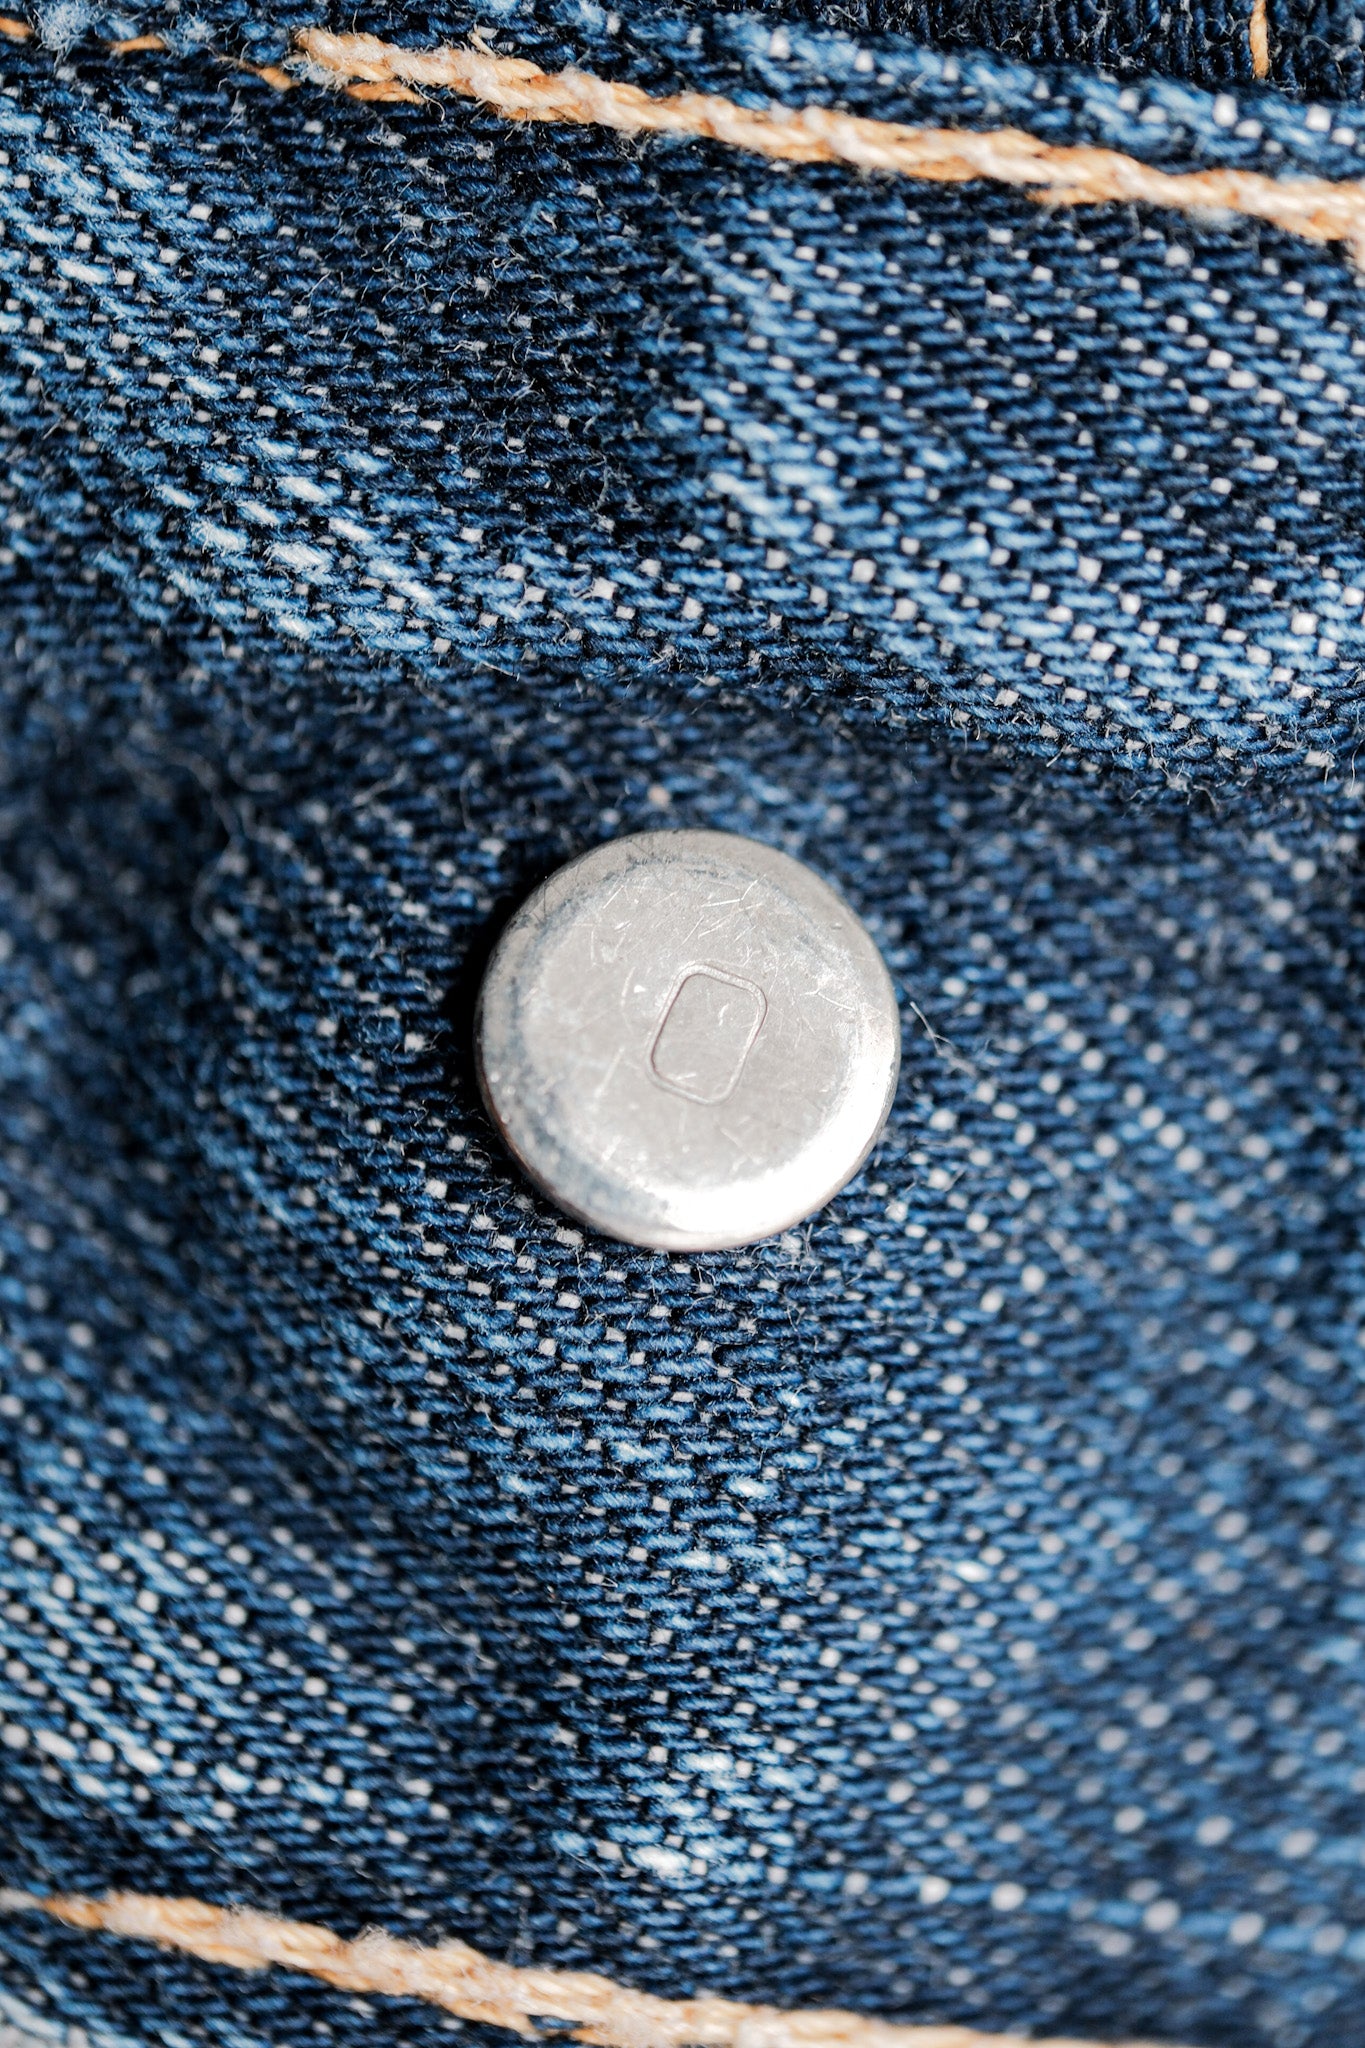 [〜60年代] Vintage Levi的557牛仔夾克尺寸。40“ Big E”